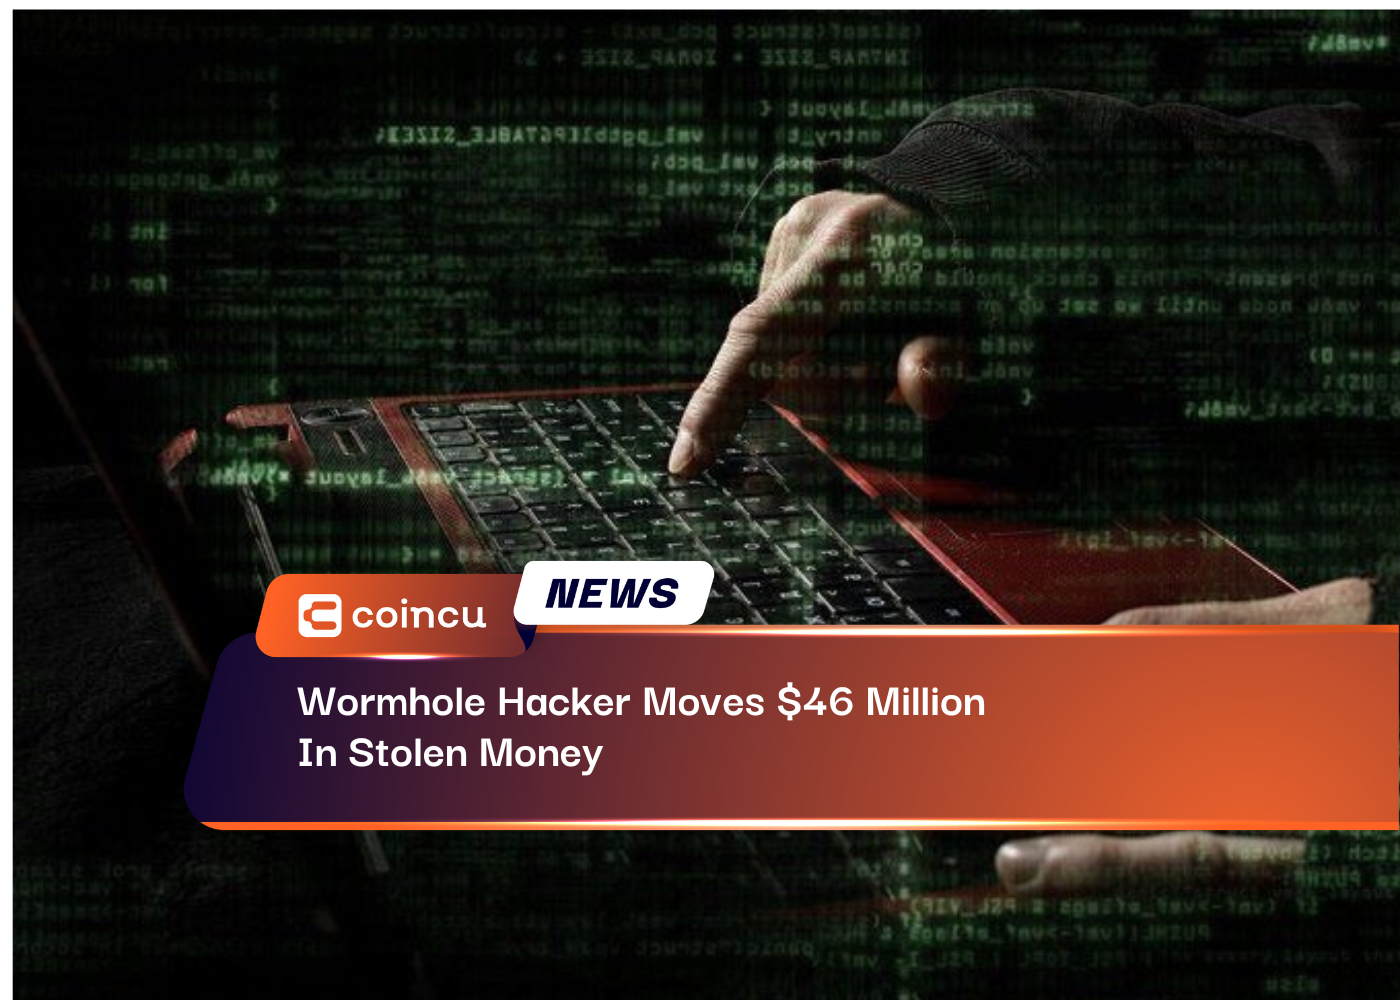 Wormhole Hacker Moves 46 Million